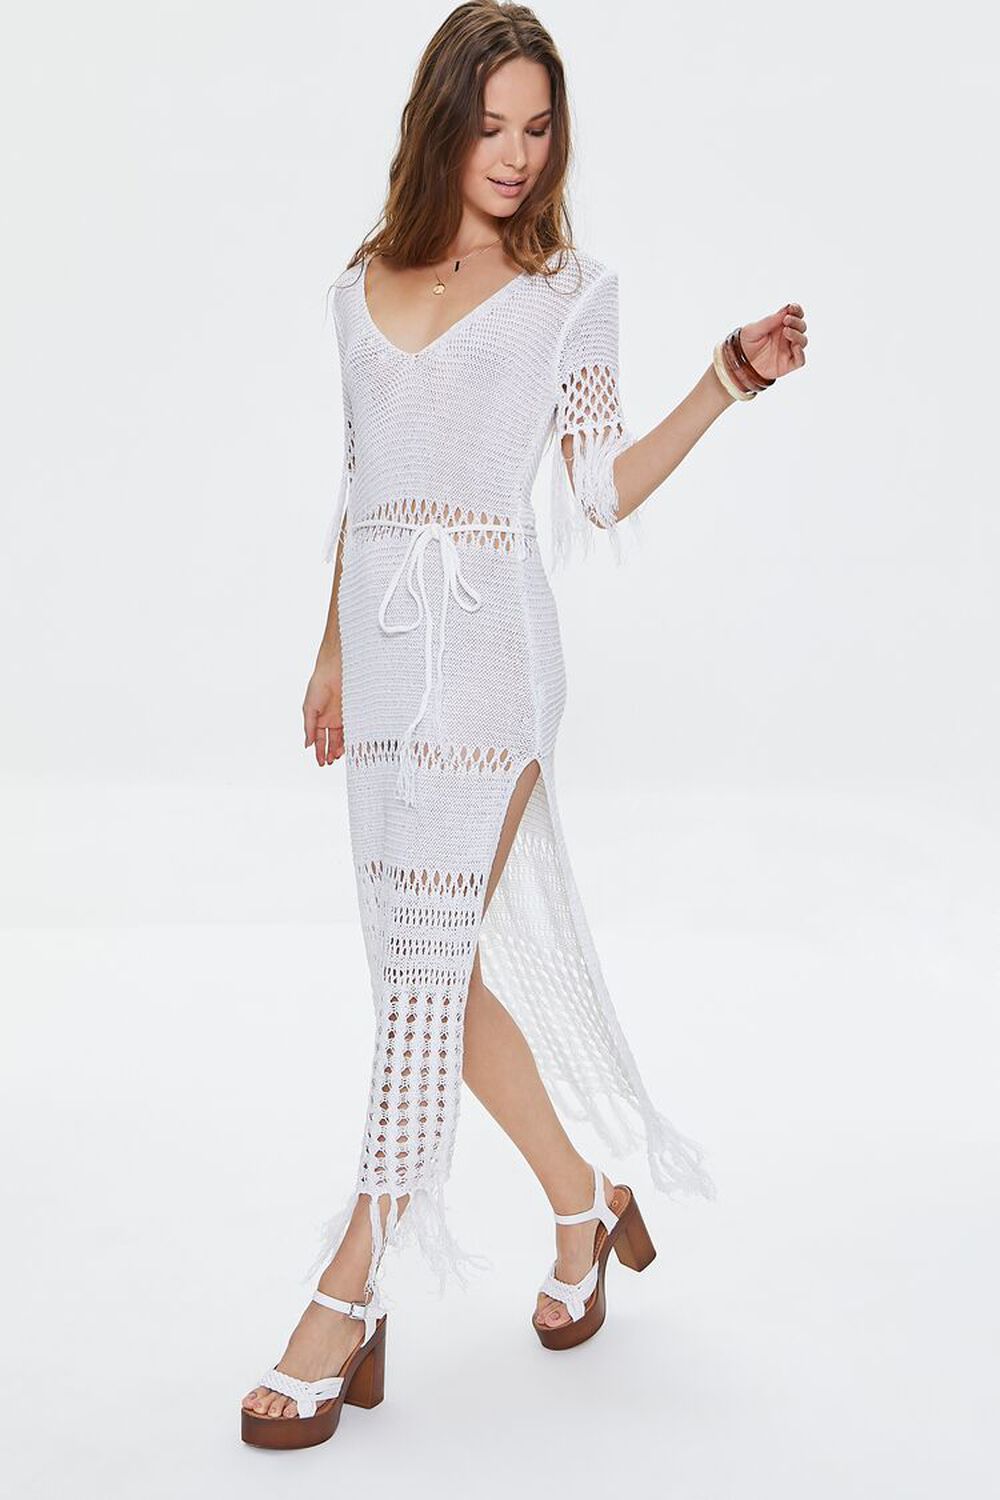 WHITE Crochet Tassel-Trim Midi Dress, image 1